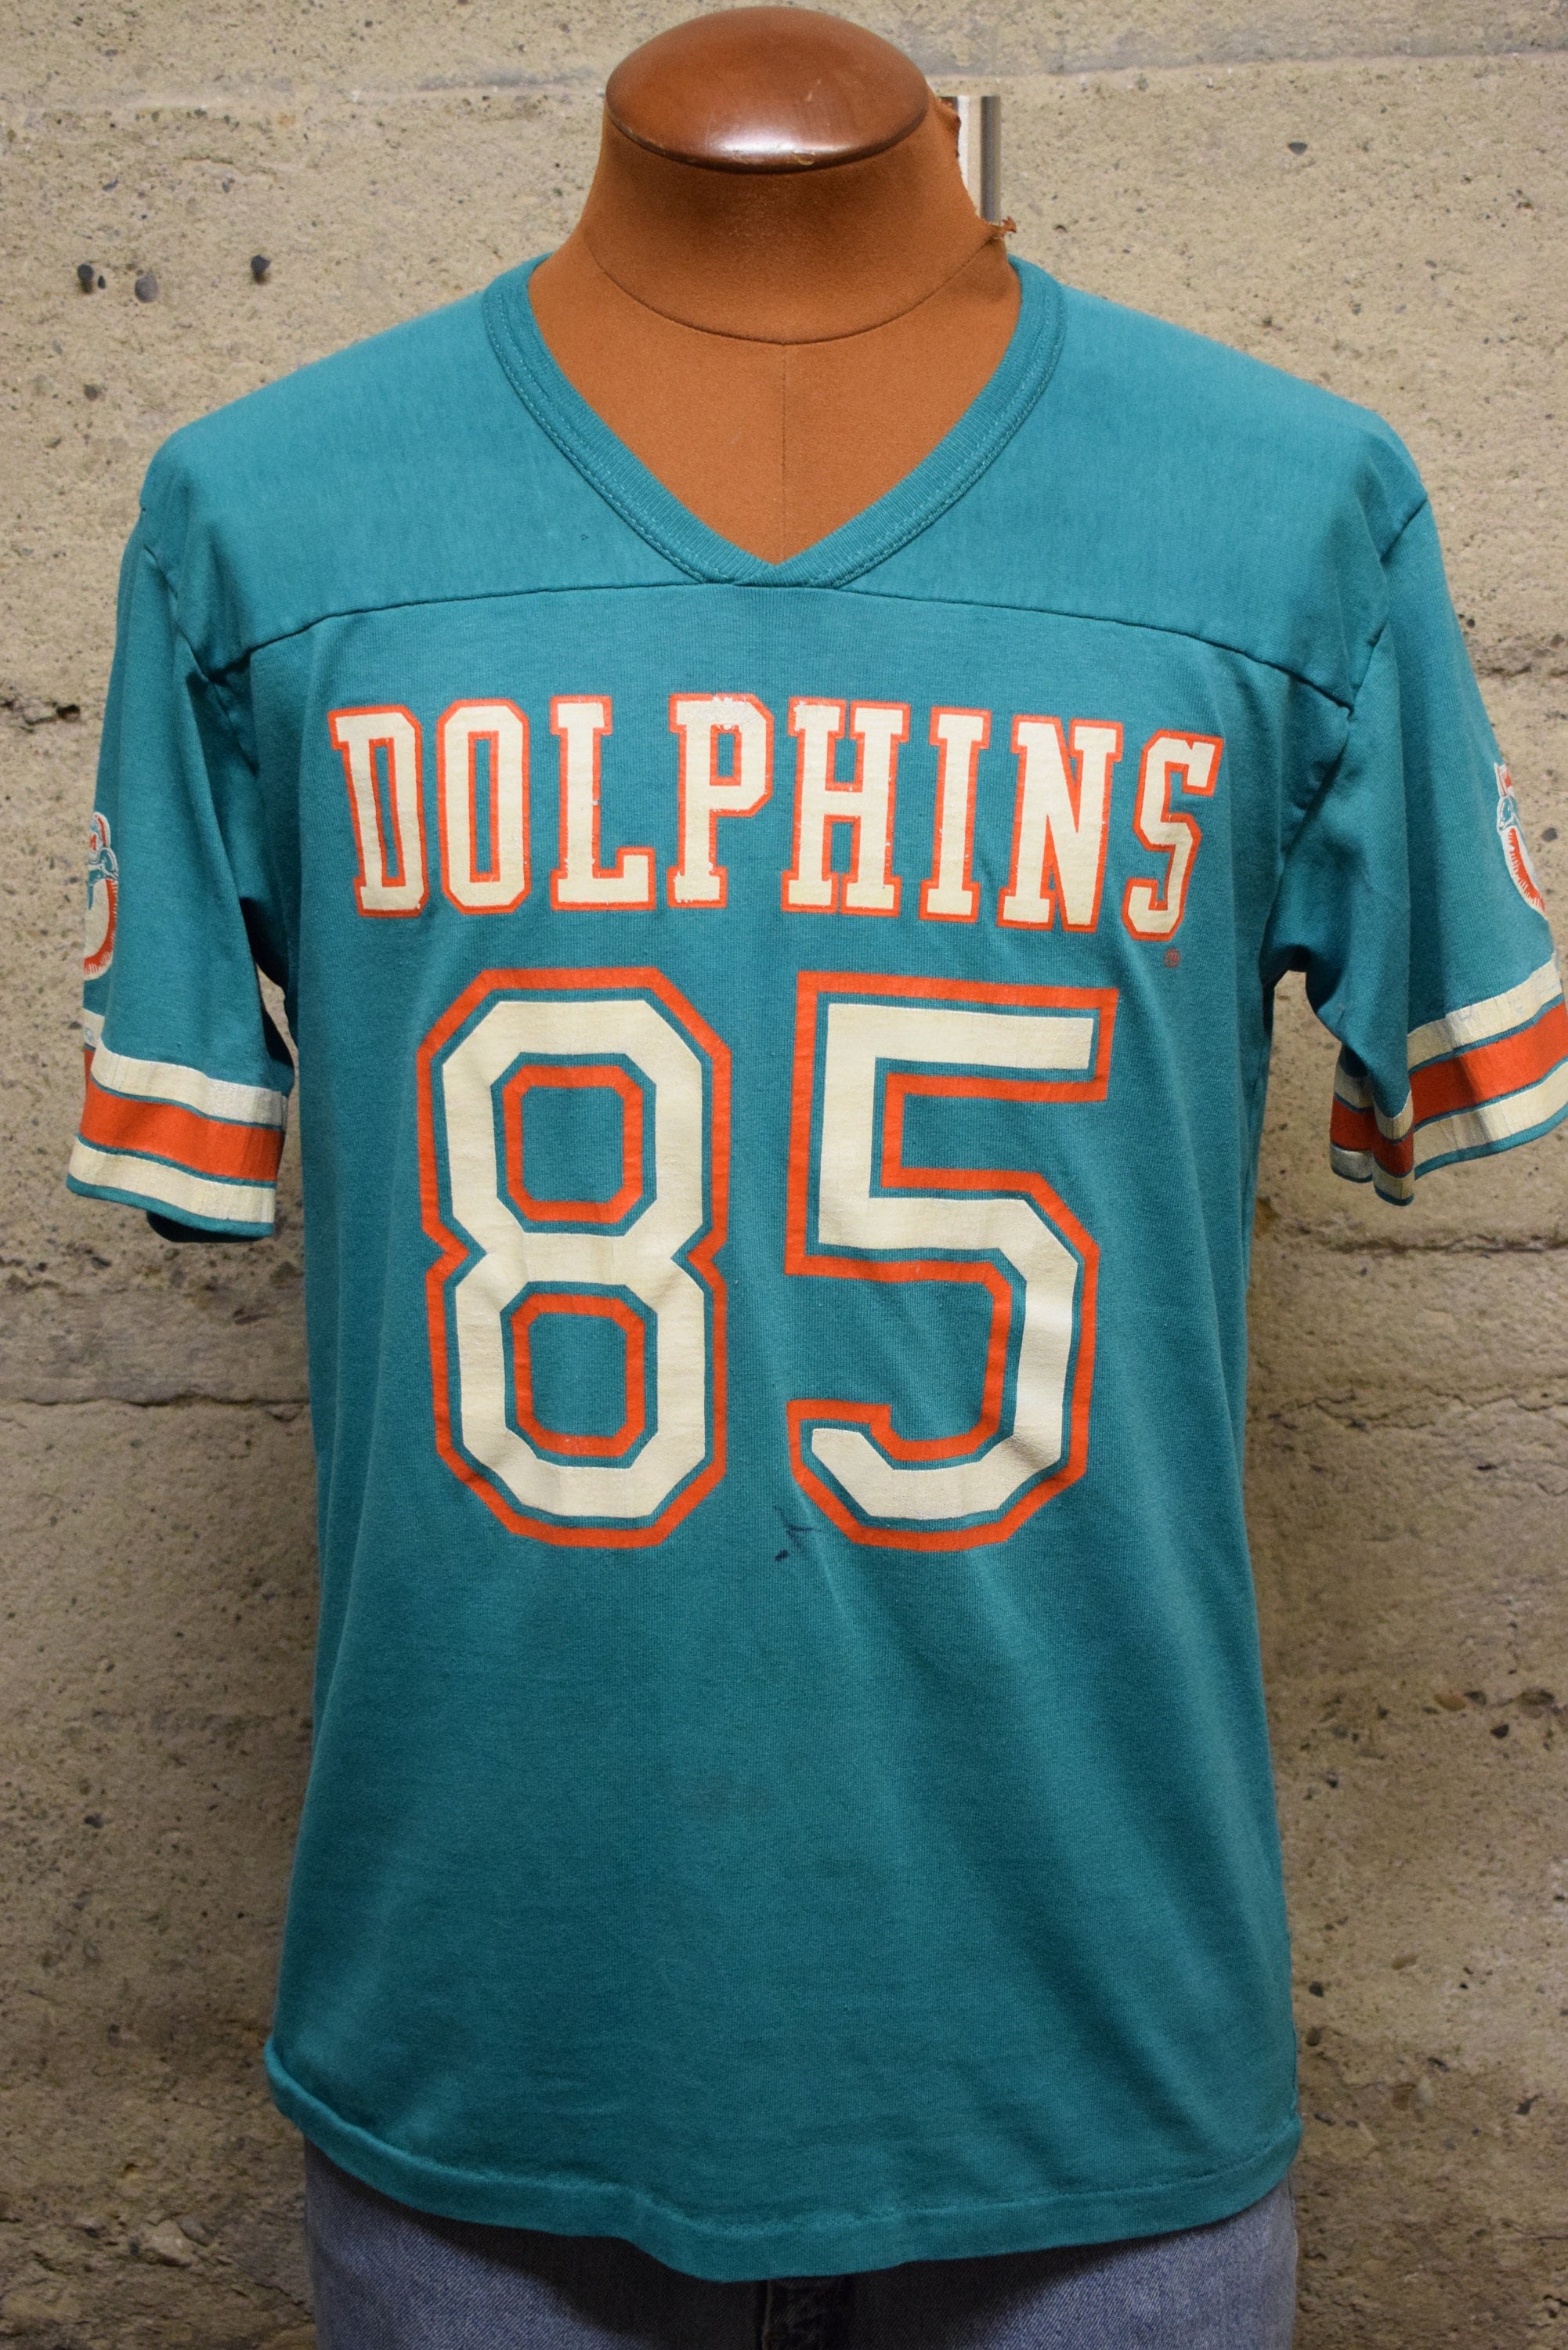 Vintage 1960s Roush Sporting Good 85 Football Jersey T Shirt